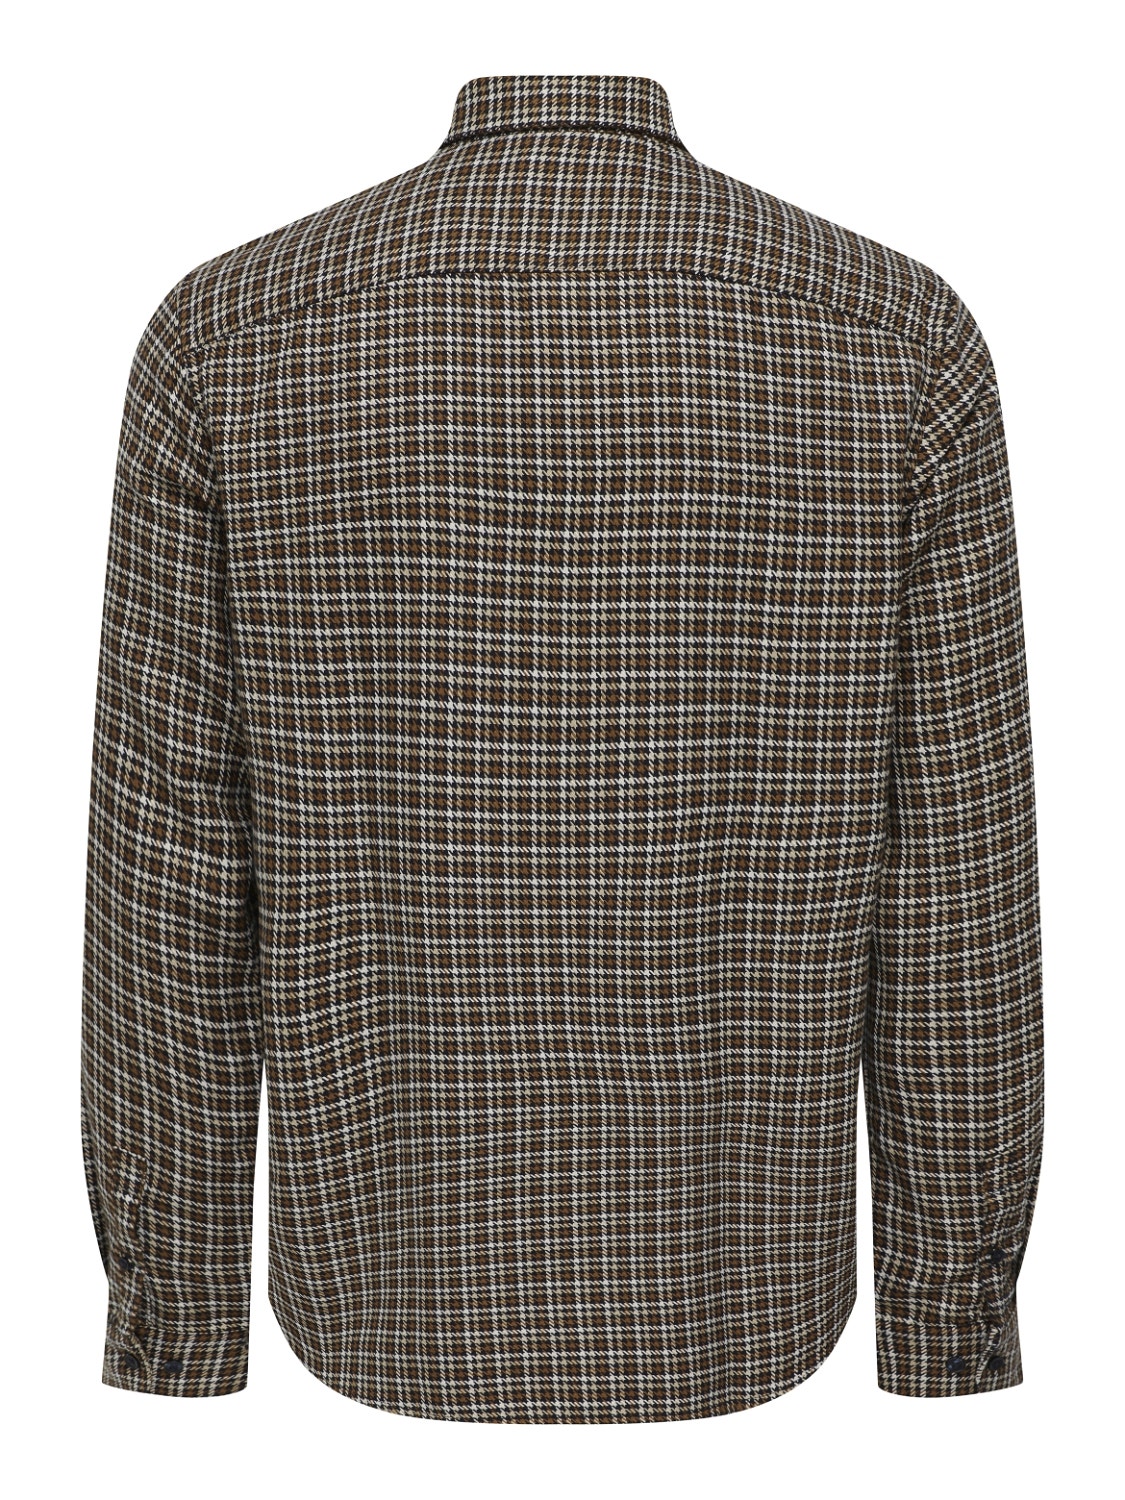 ONLY & SONS Camisas Corte regular Cuello de camisa -Dark Navy - 22023025